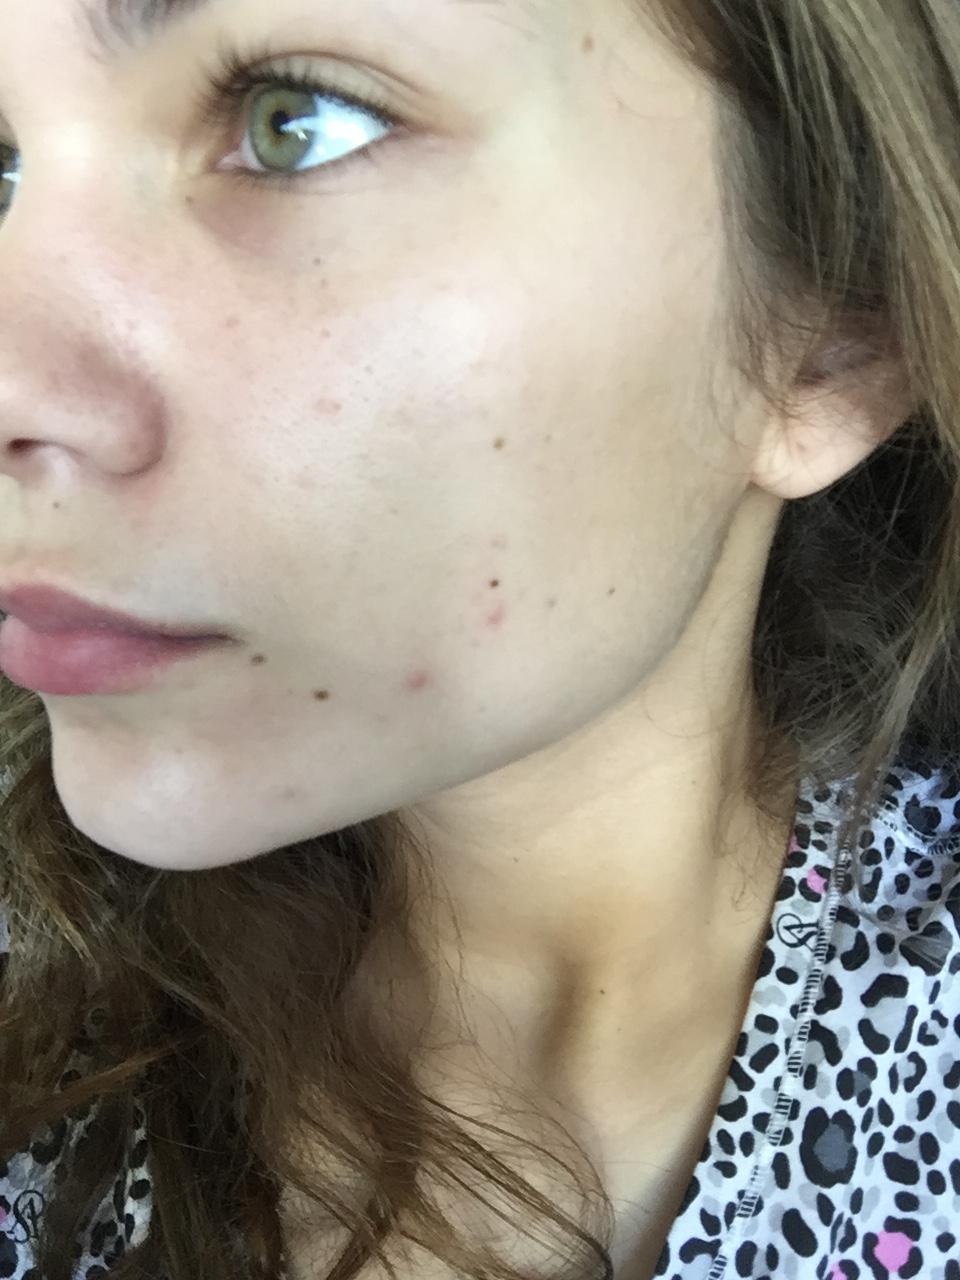 Red spots on face - Beauty Insider Community